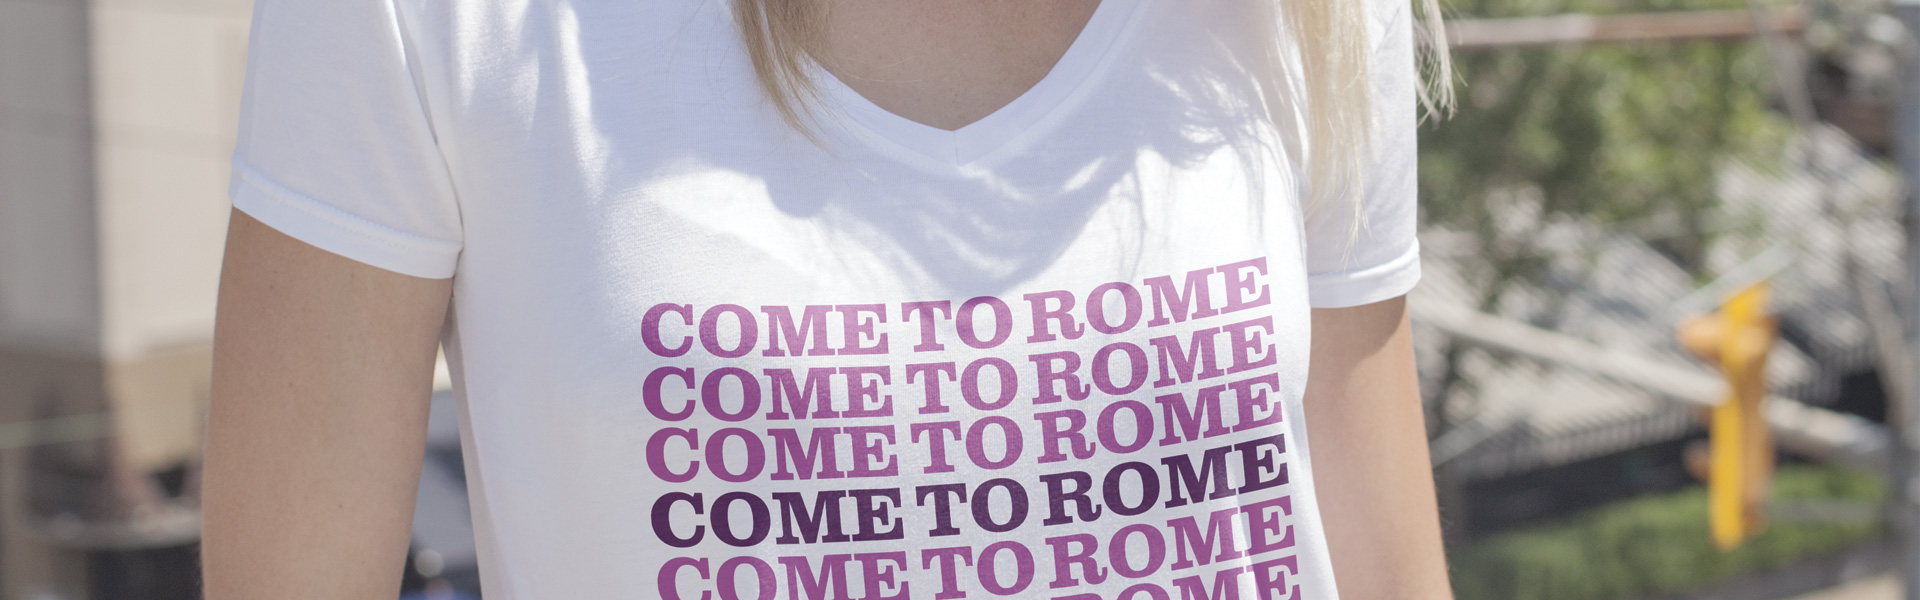 Come to Rome